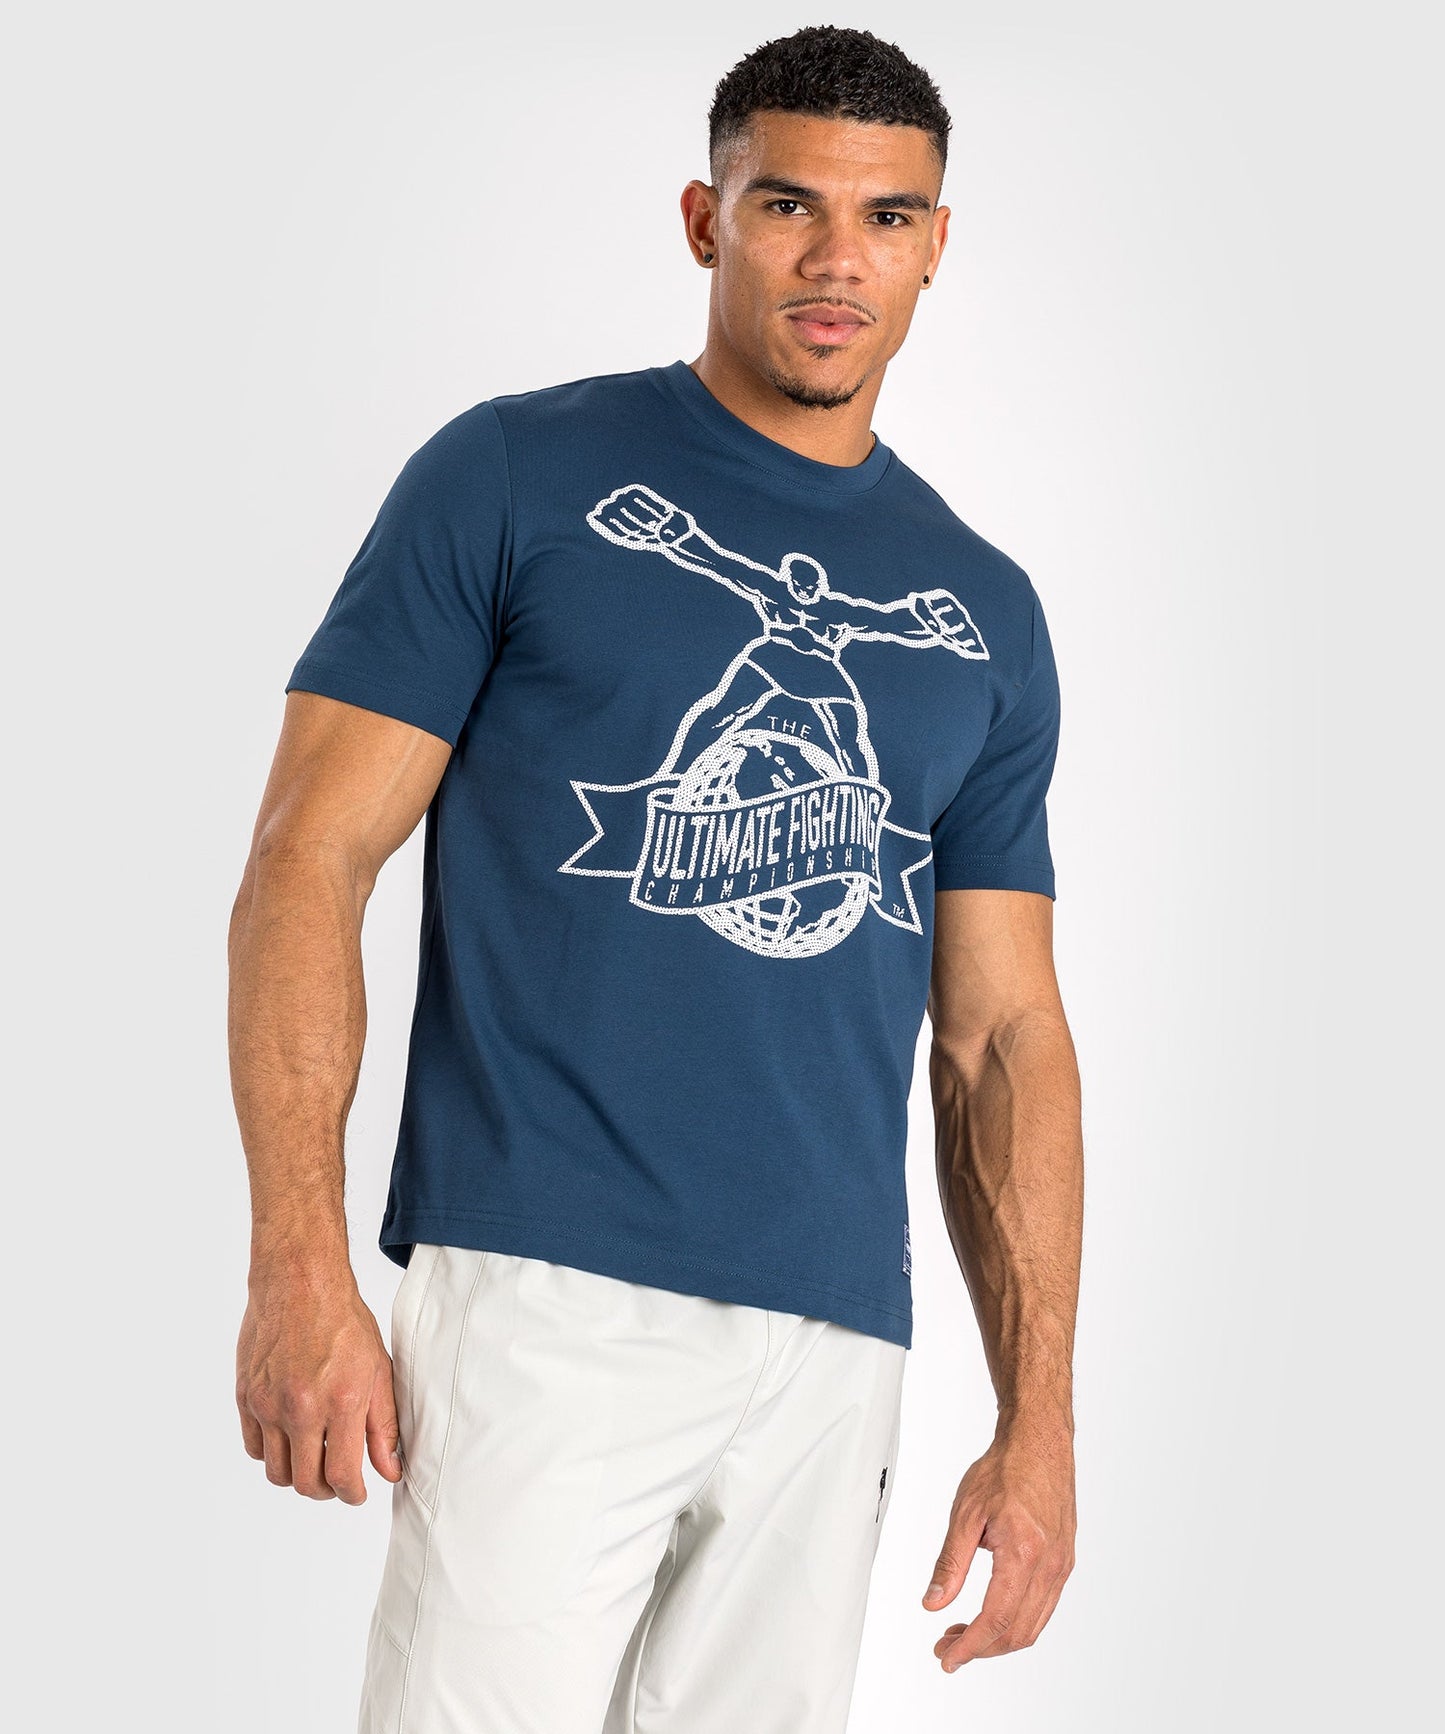 UFC by Venum Ulti-Man T-Shirt - Navy Blue/ White